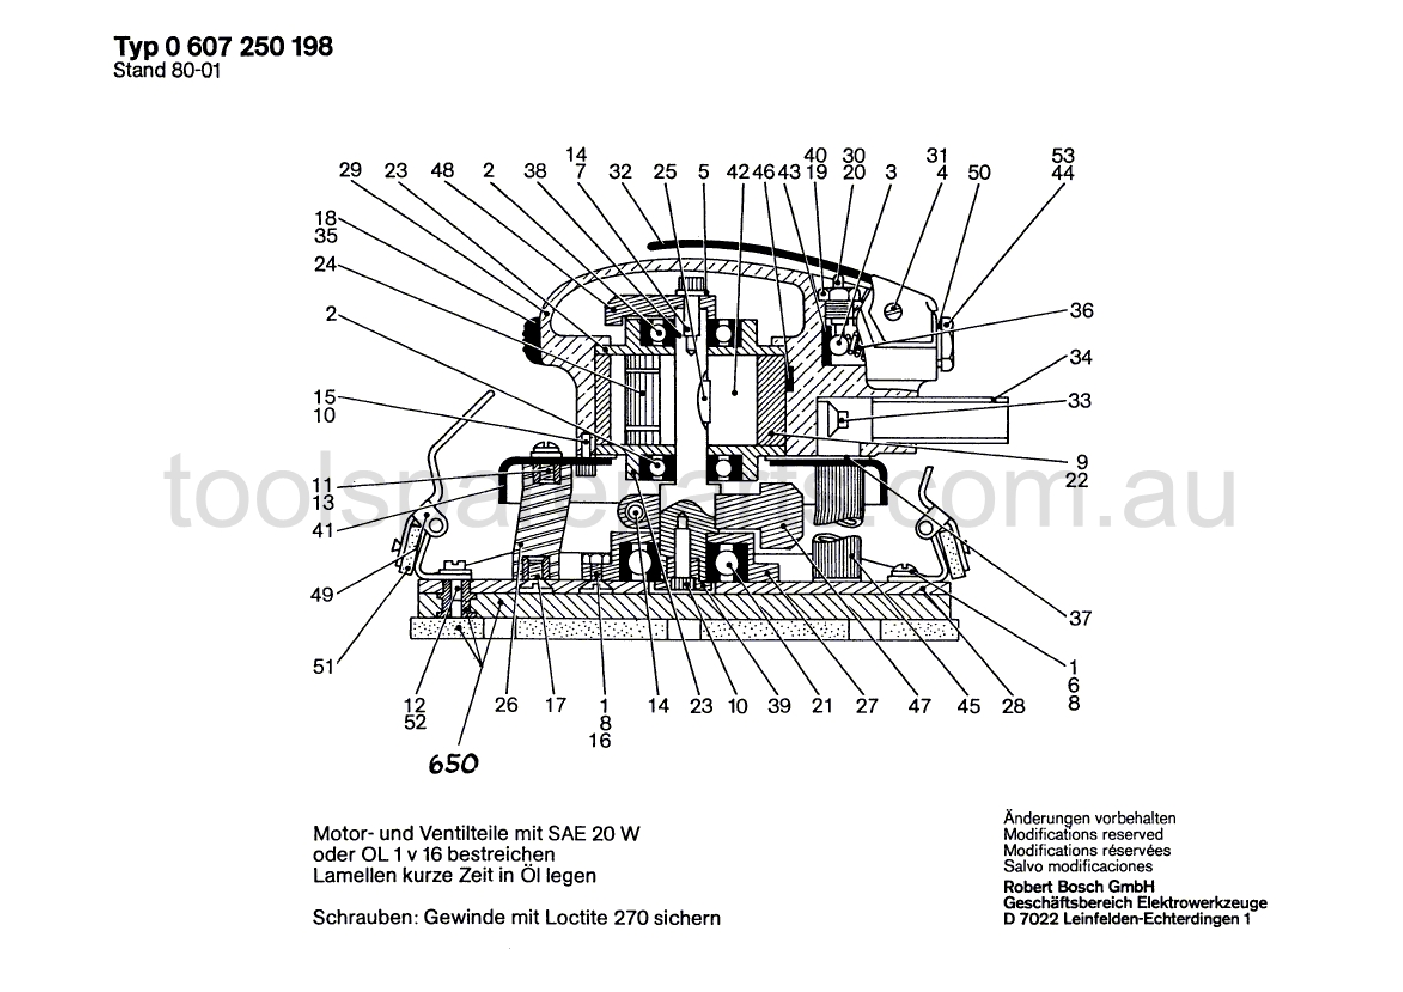 Bosch 50 WATT-SERIE 0607250198  Diagram 1